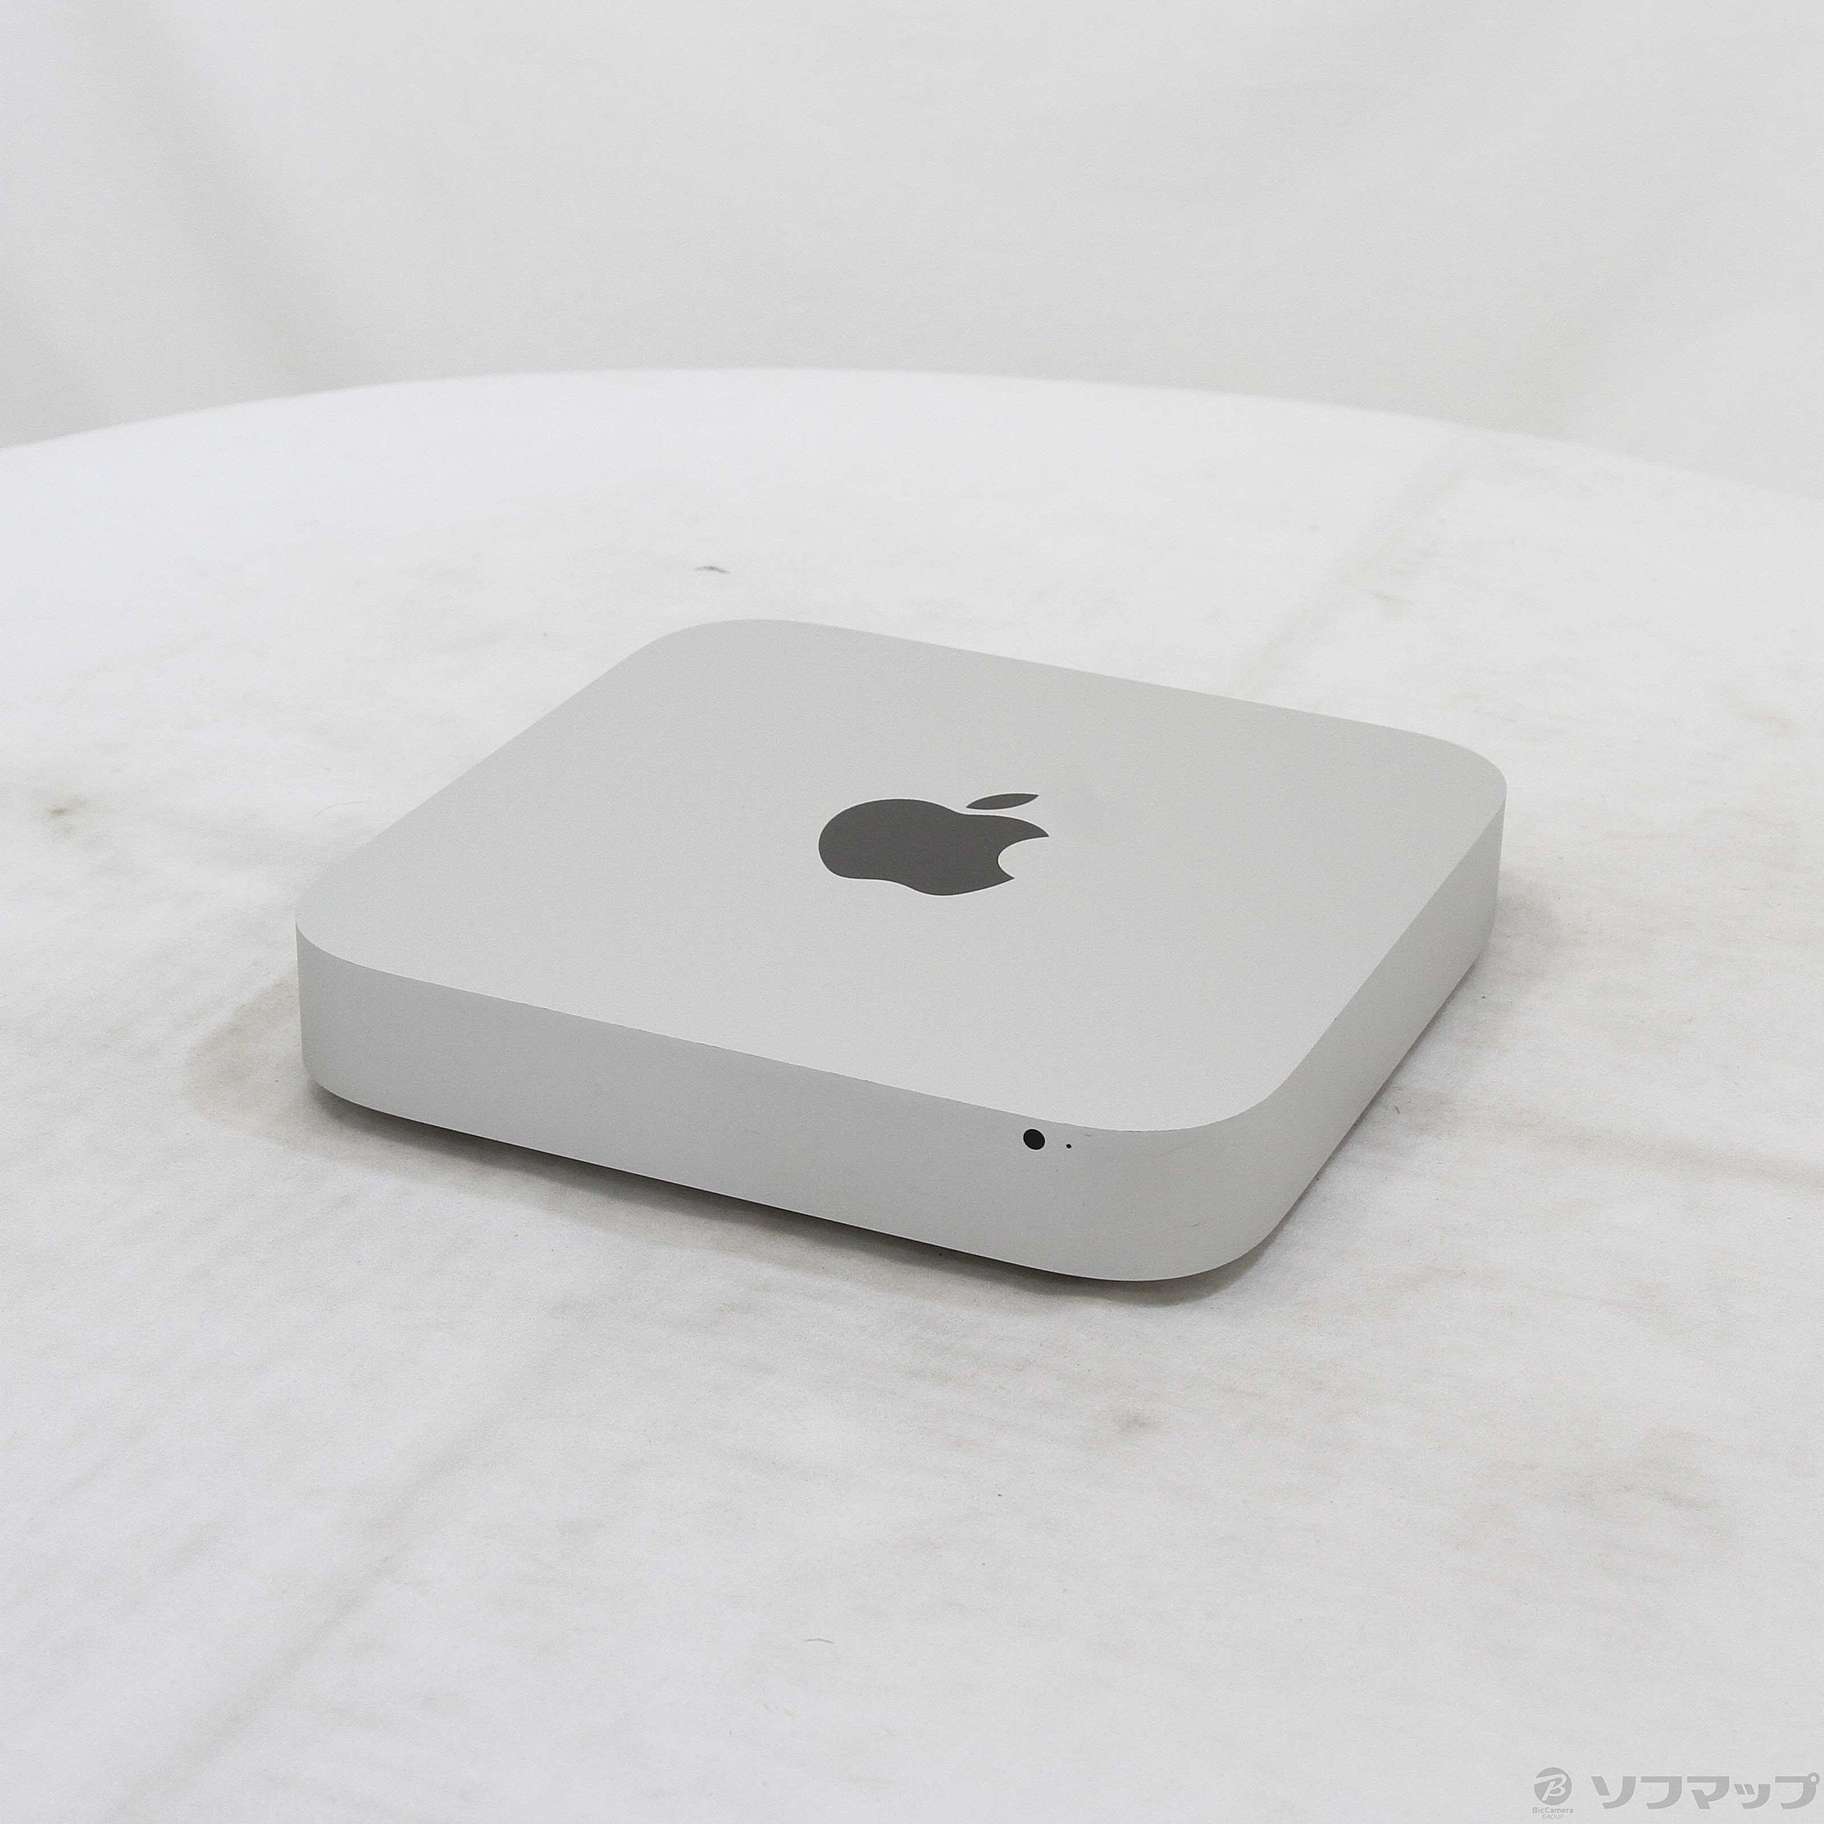 中古)Apple Mac mini Late 2012 MD388J A Core_i7 2.3GHz 8GB HDD1TB